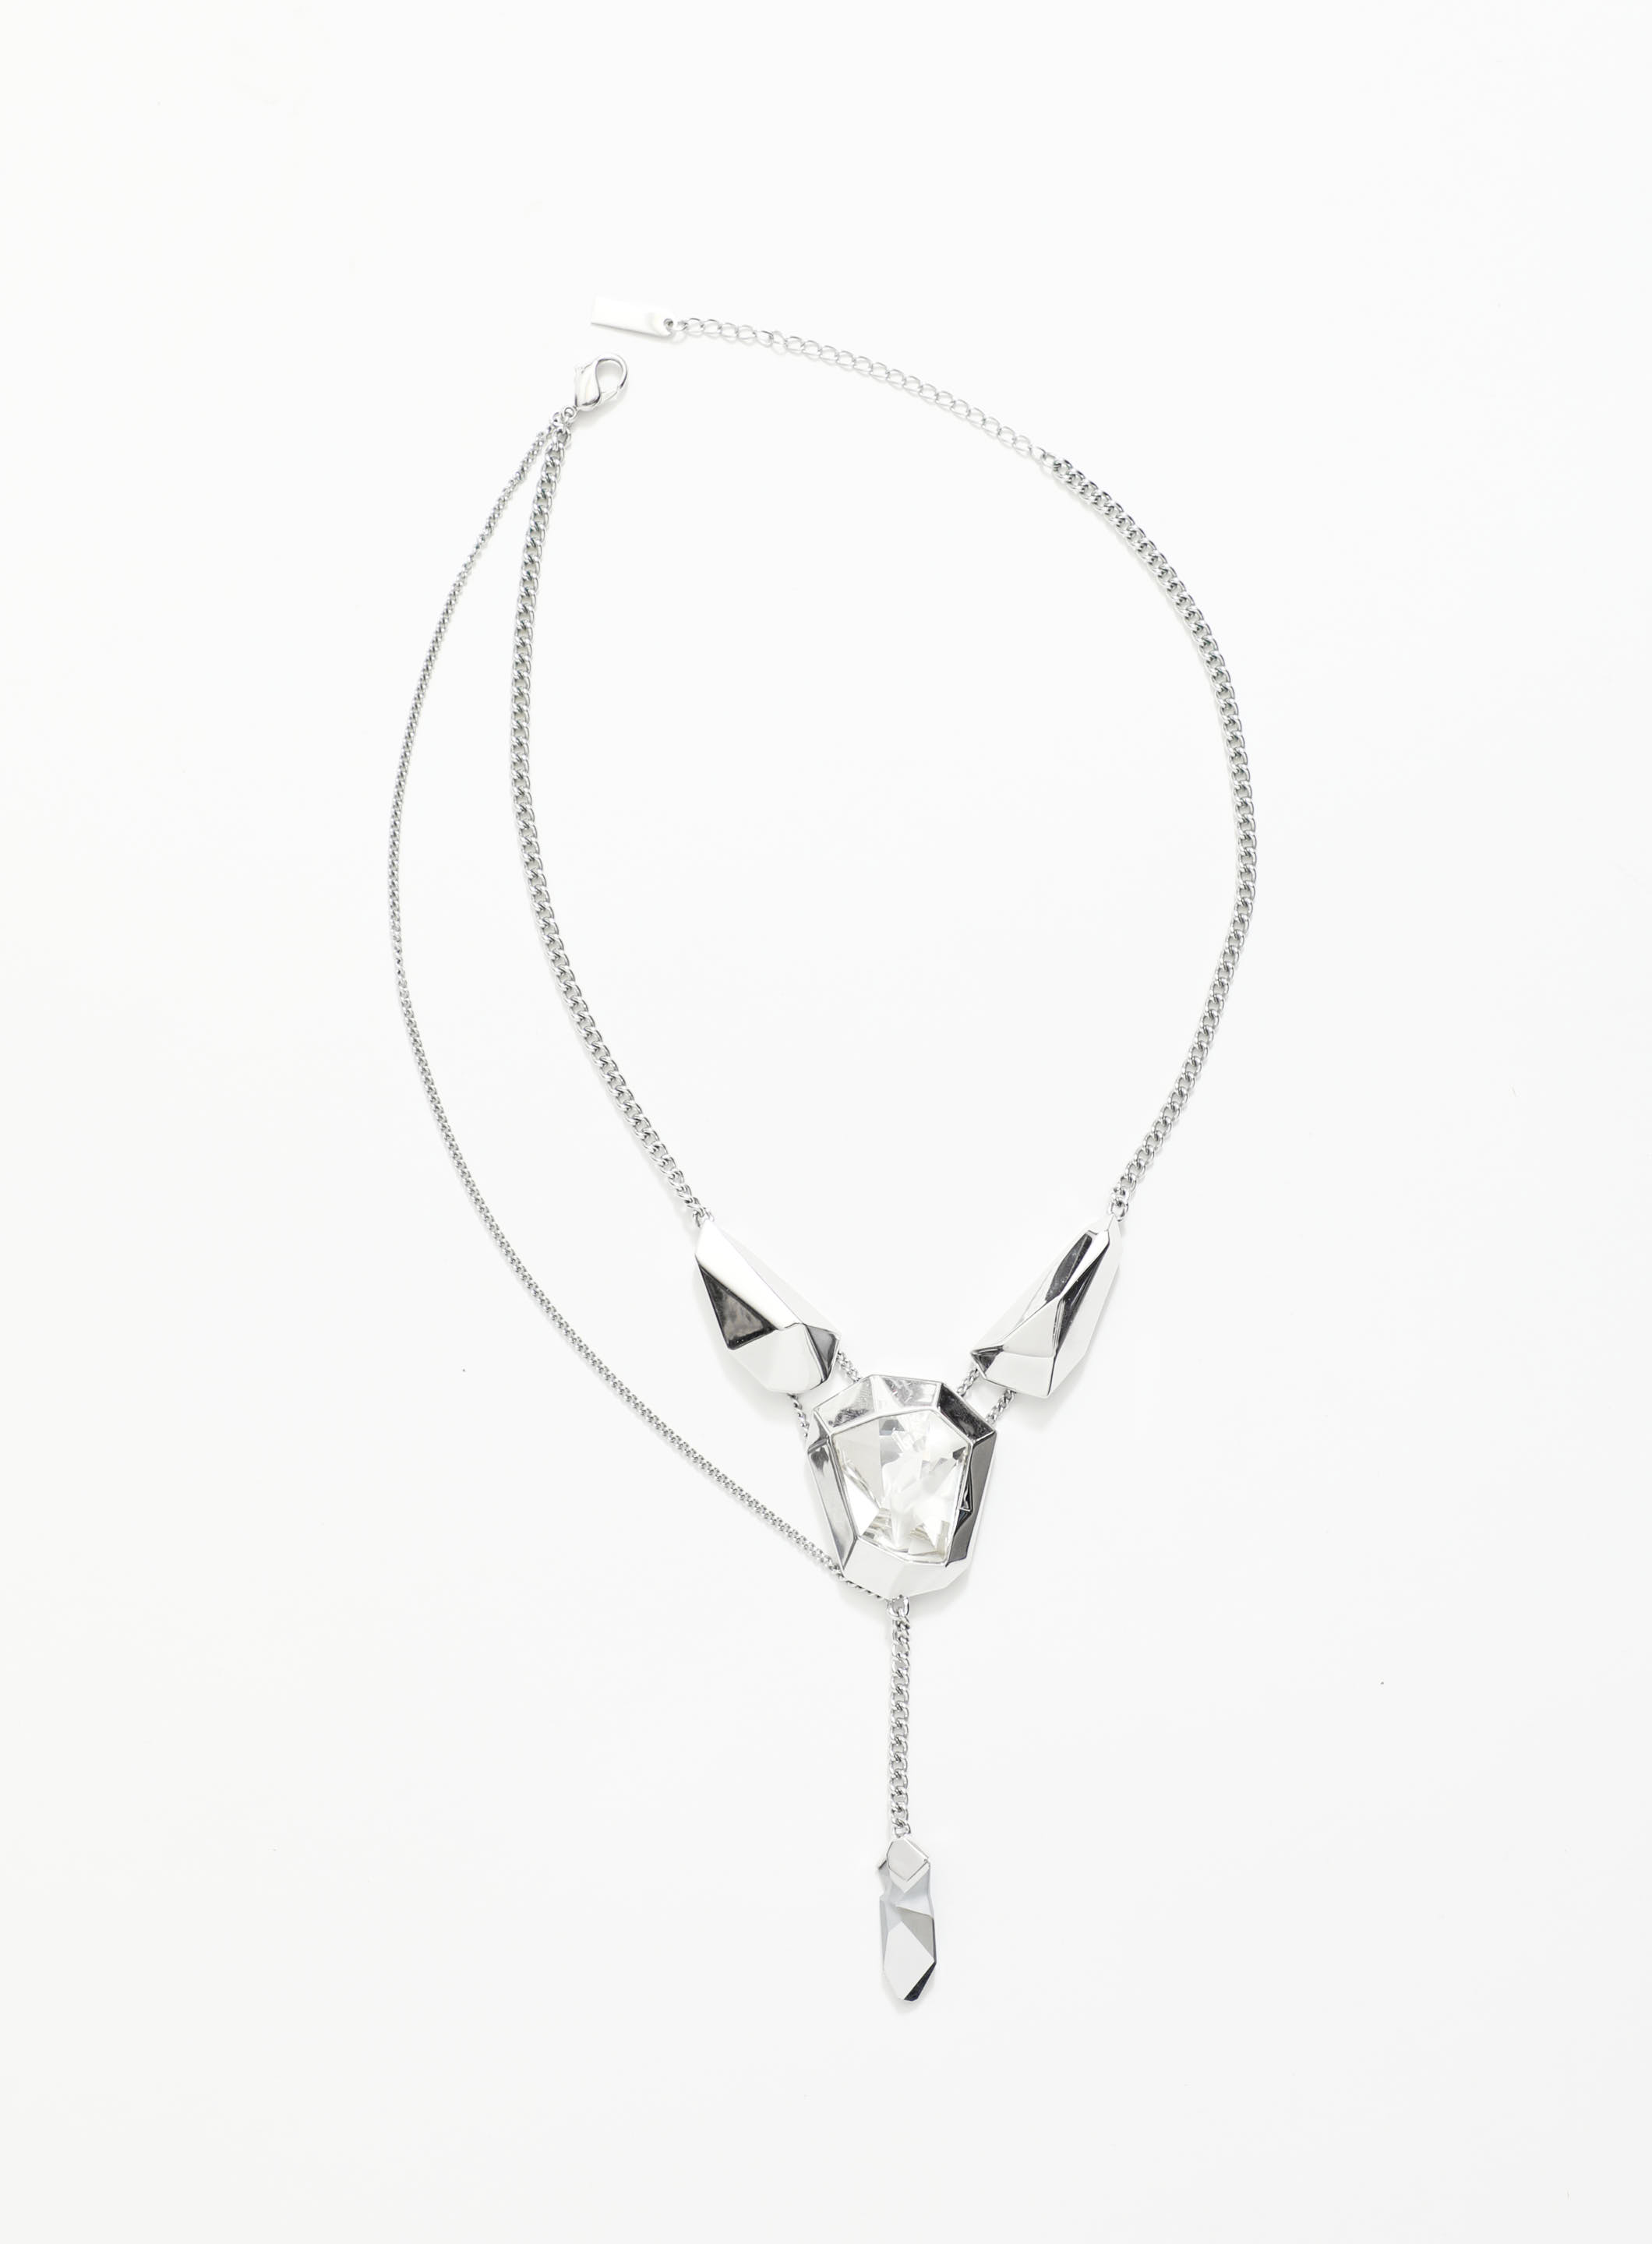 2016 x Swarovski Asymmetrical 'Kaputt' Necklace